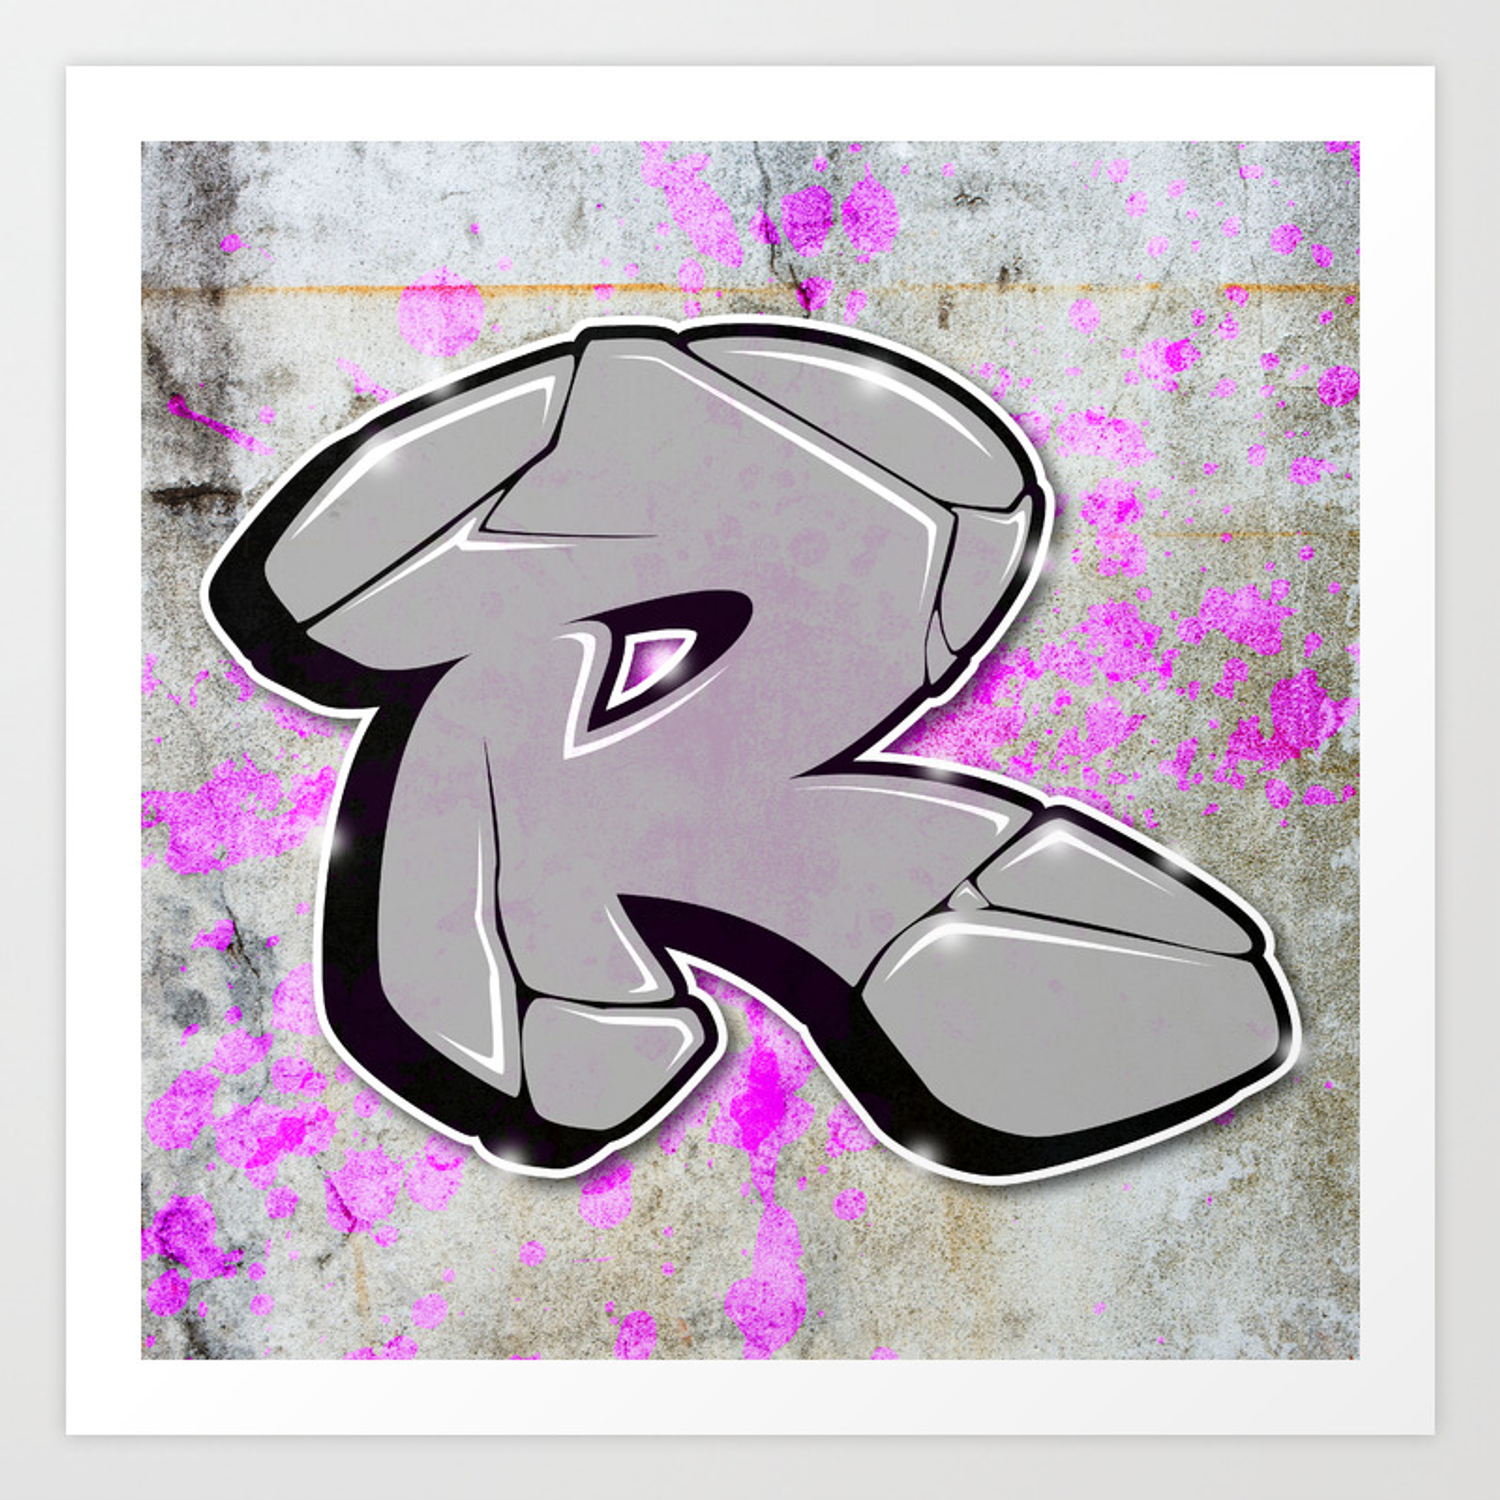 Graffiti Alphabet Letters R